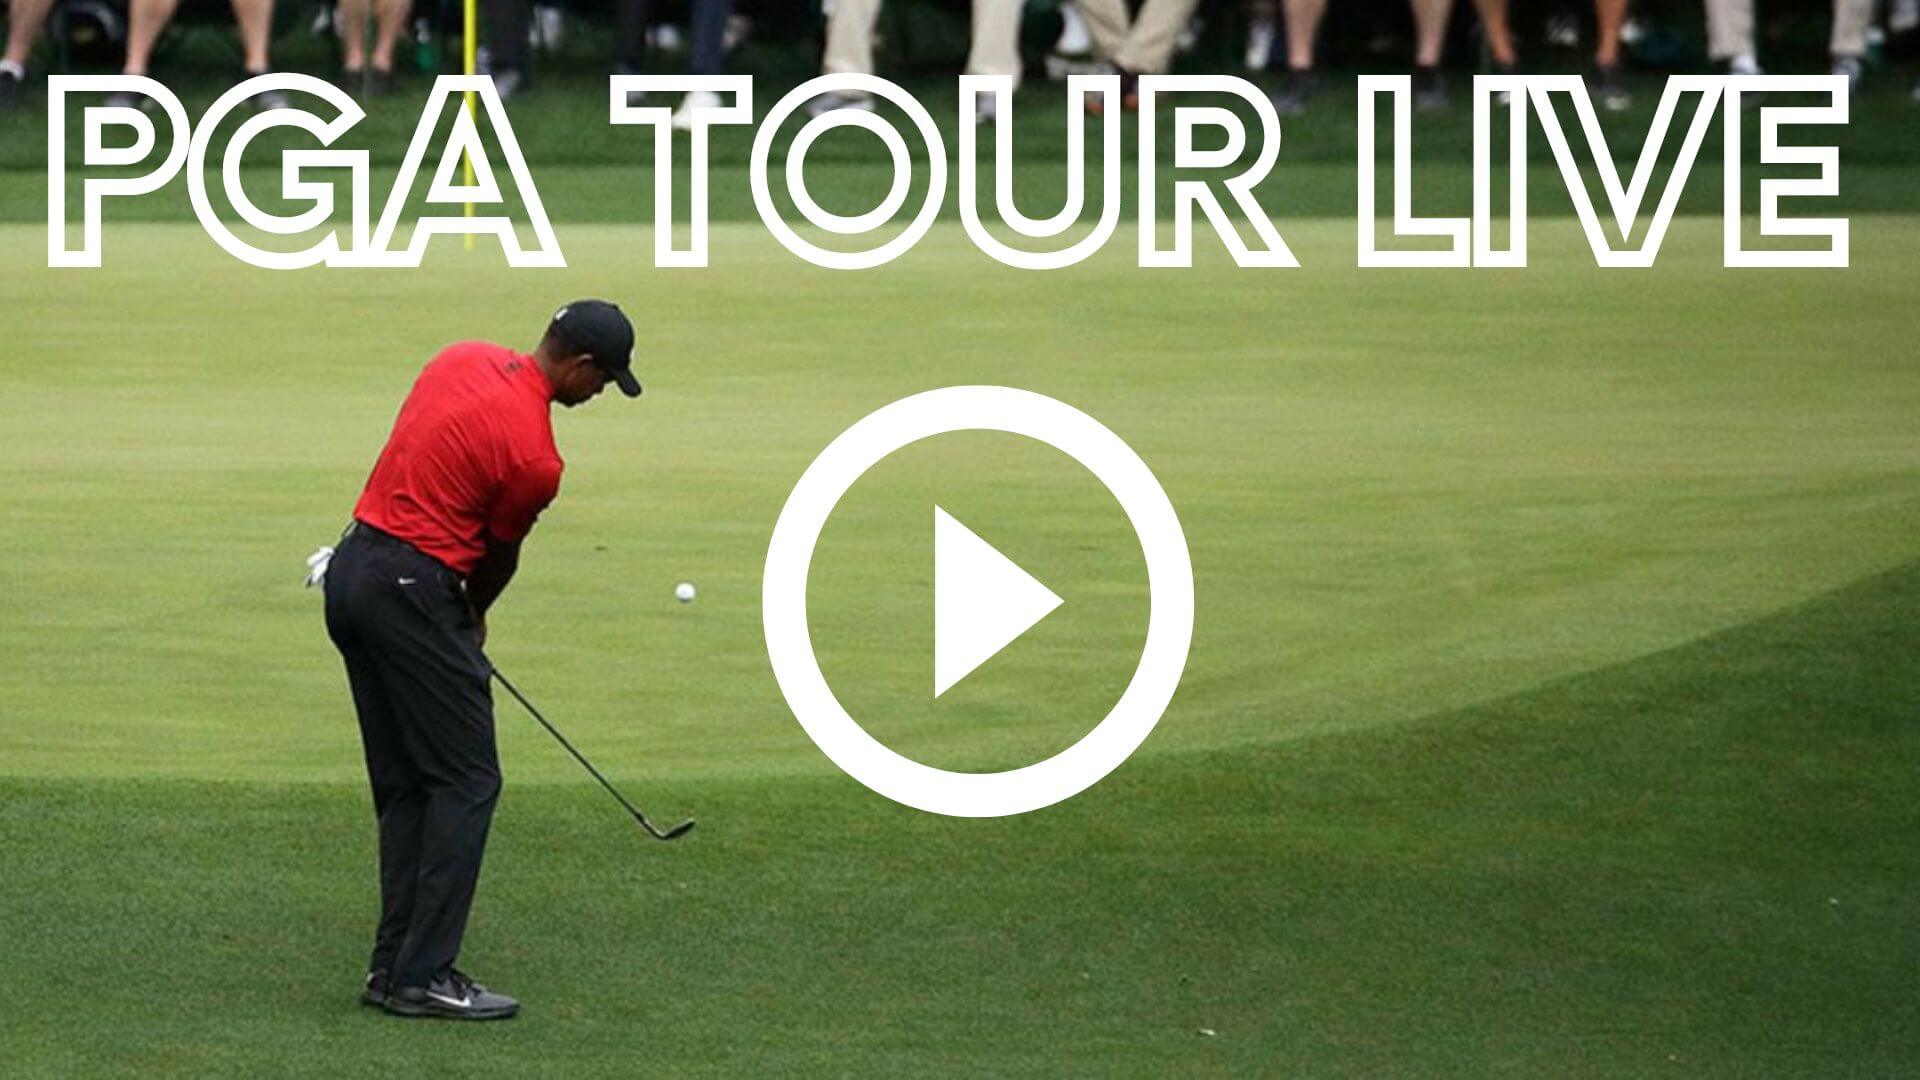 international-crown-golf-live-stream-lpga-tour